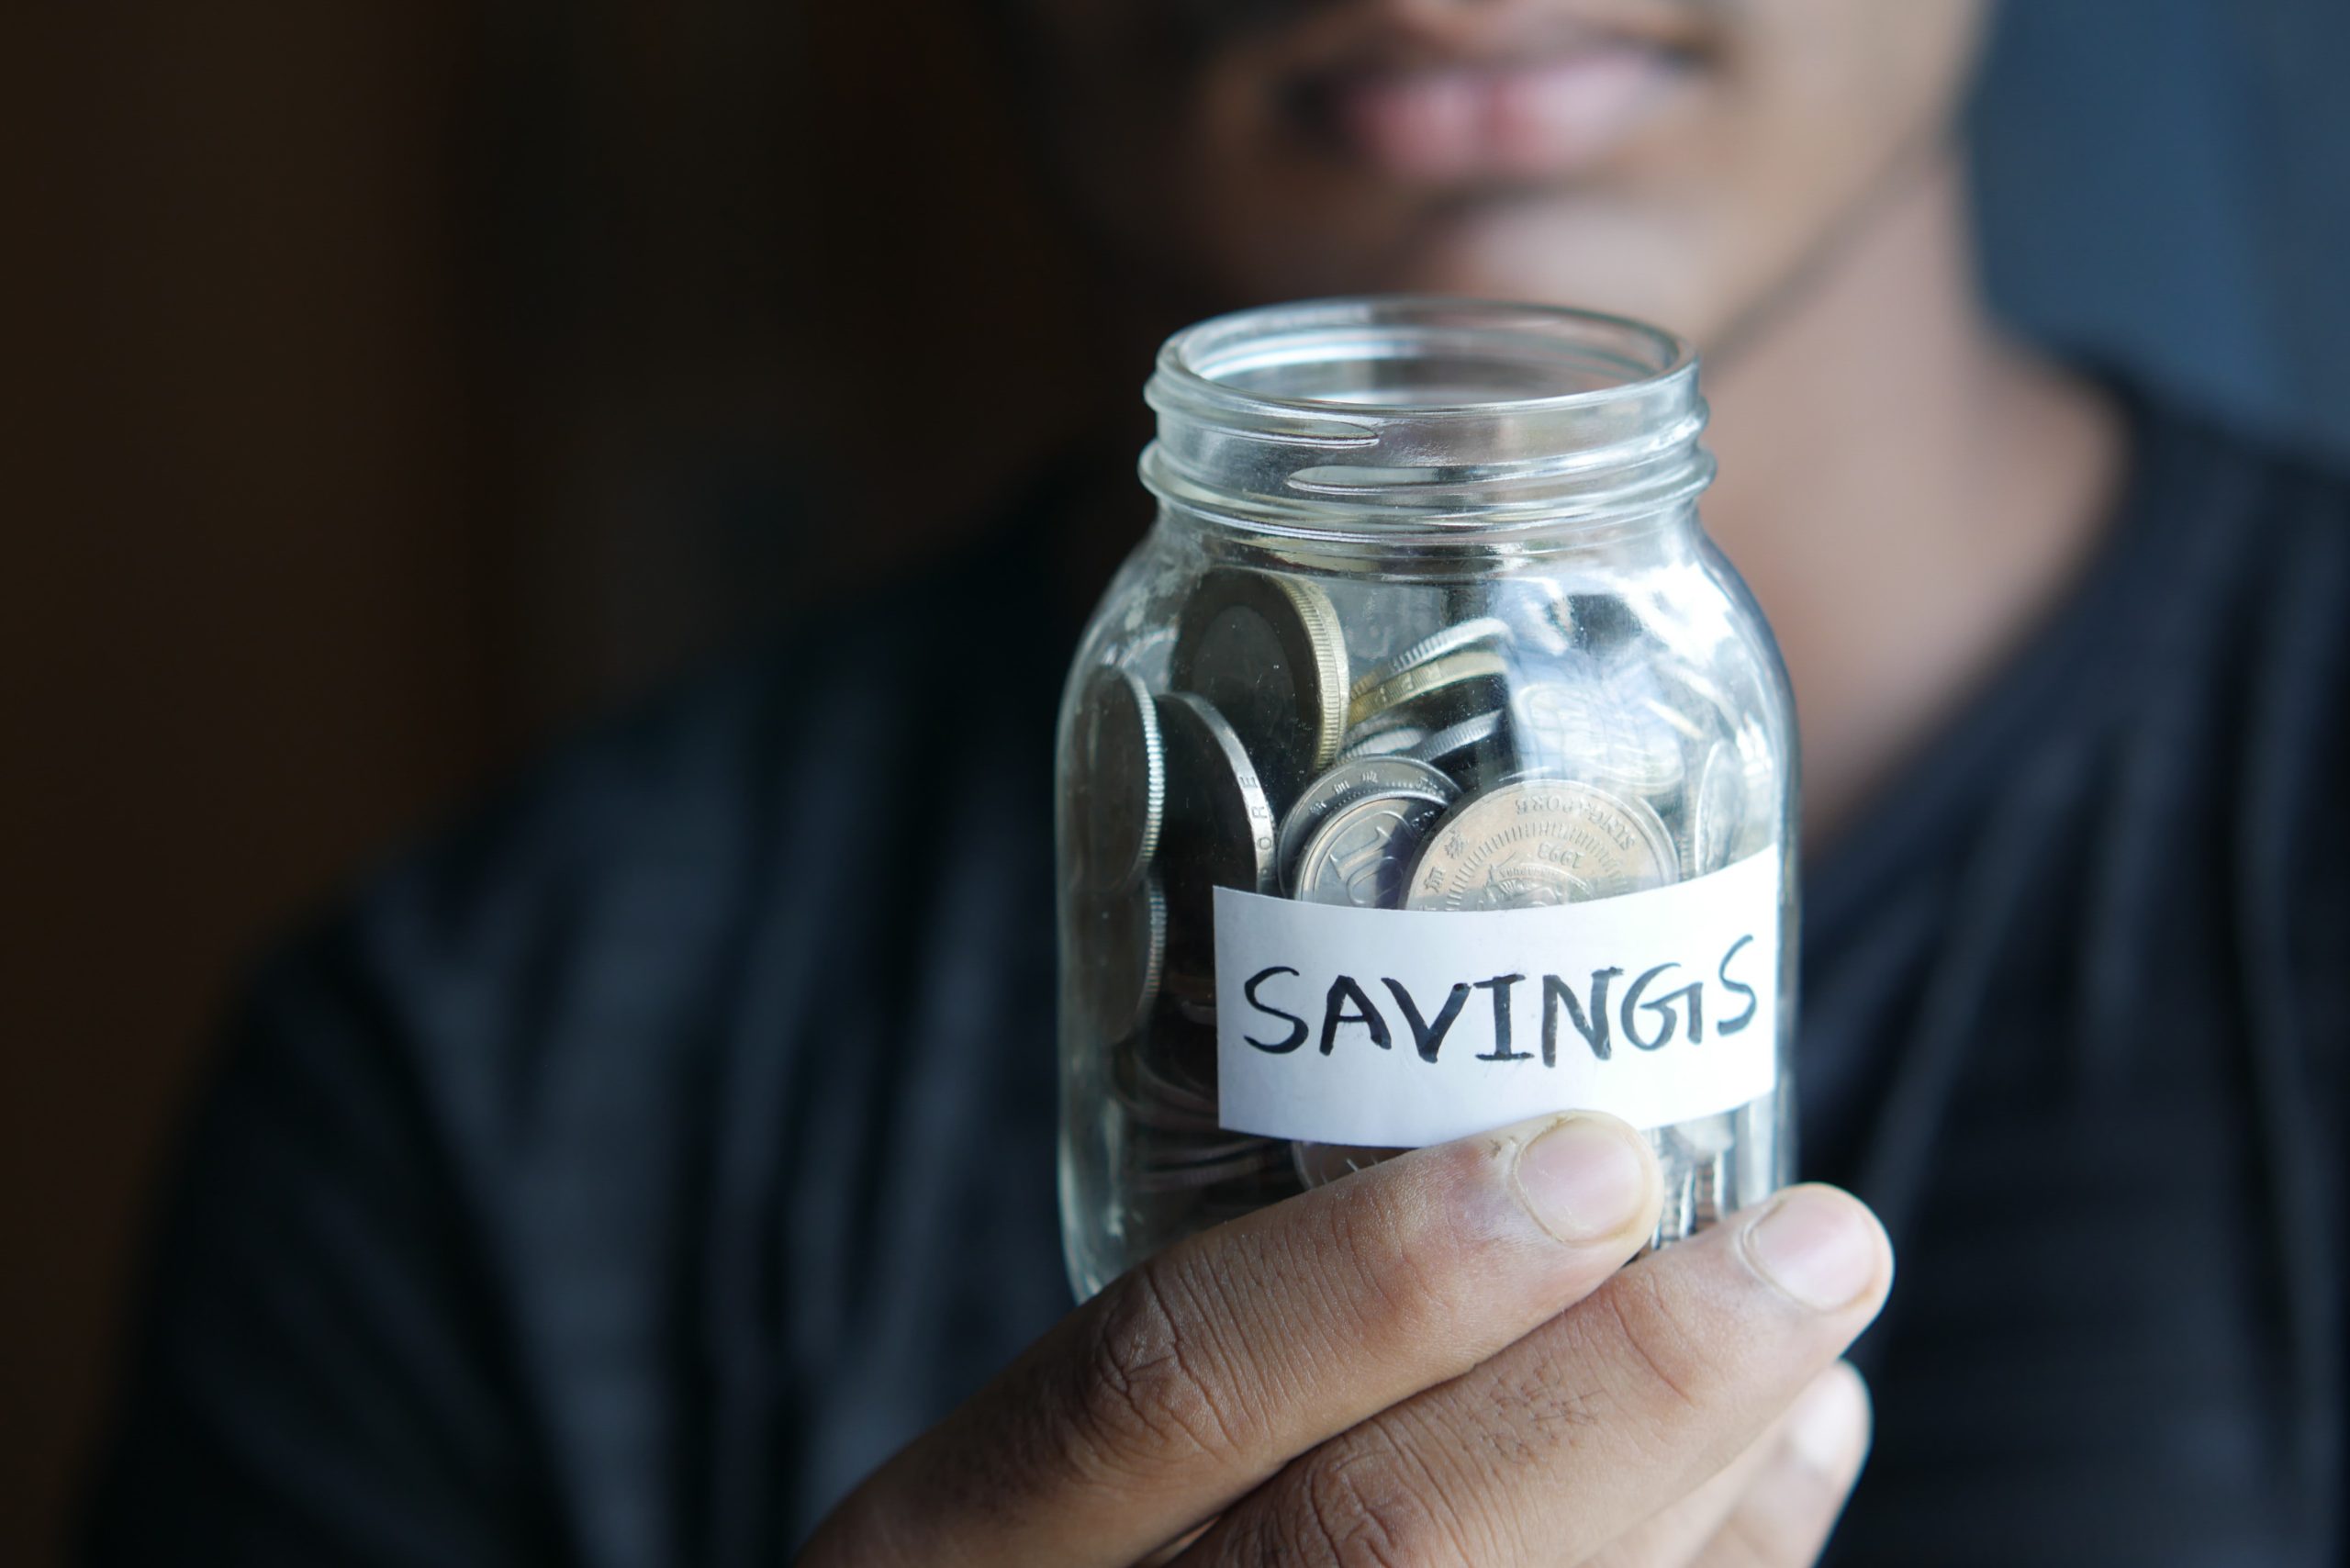 Which behavior can help increase savings?